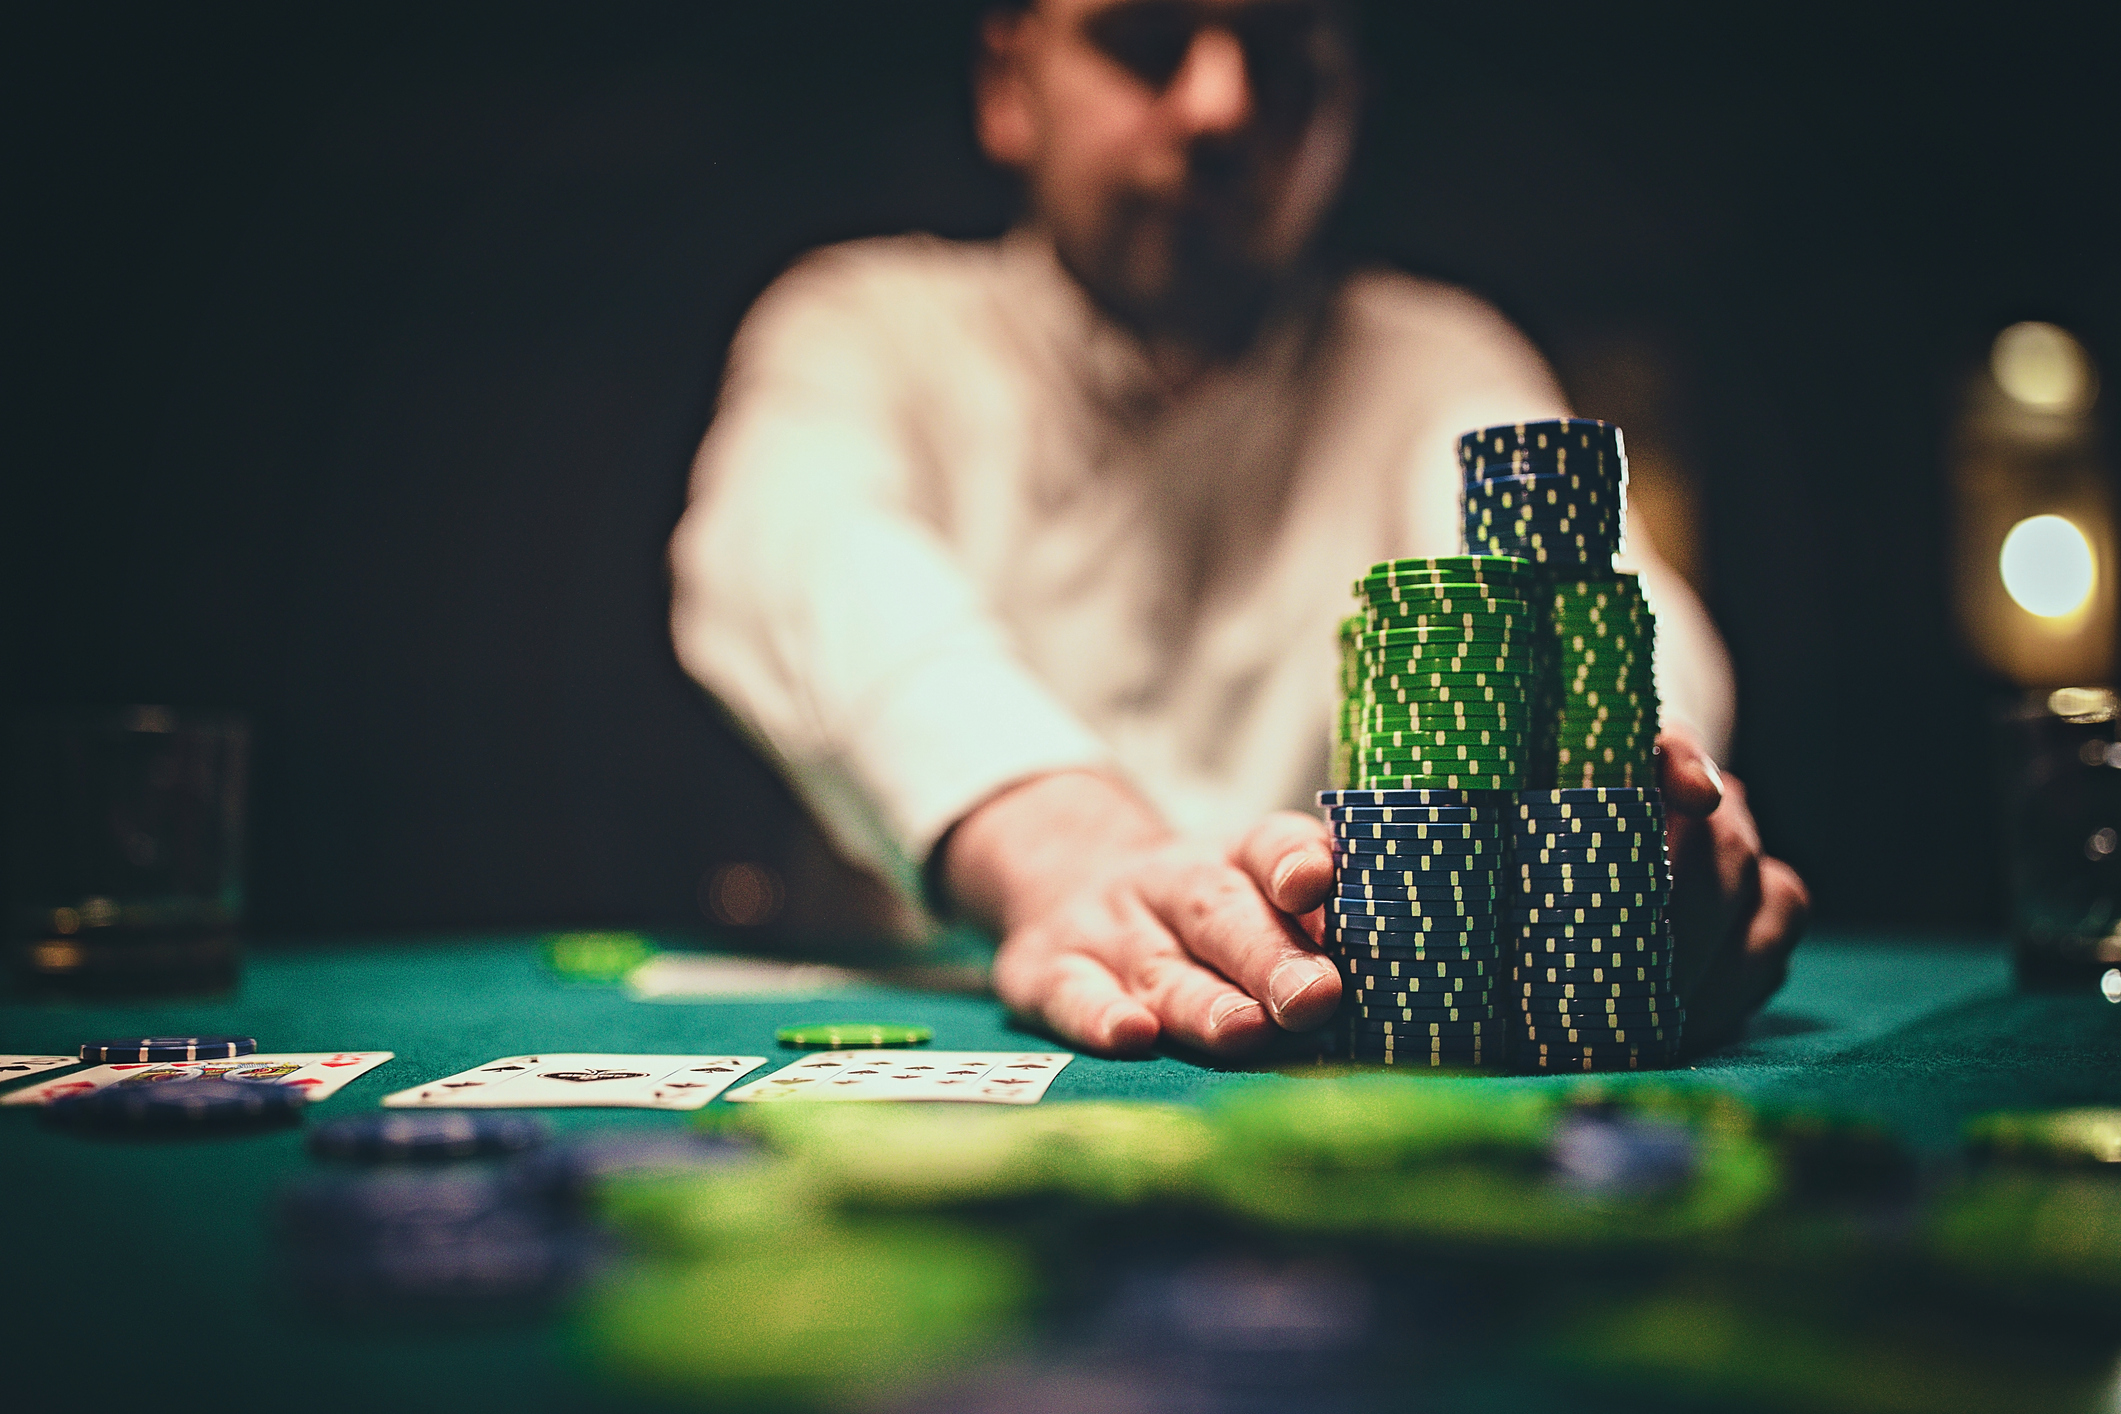 Man playing poker in dark room at night